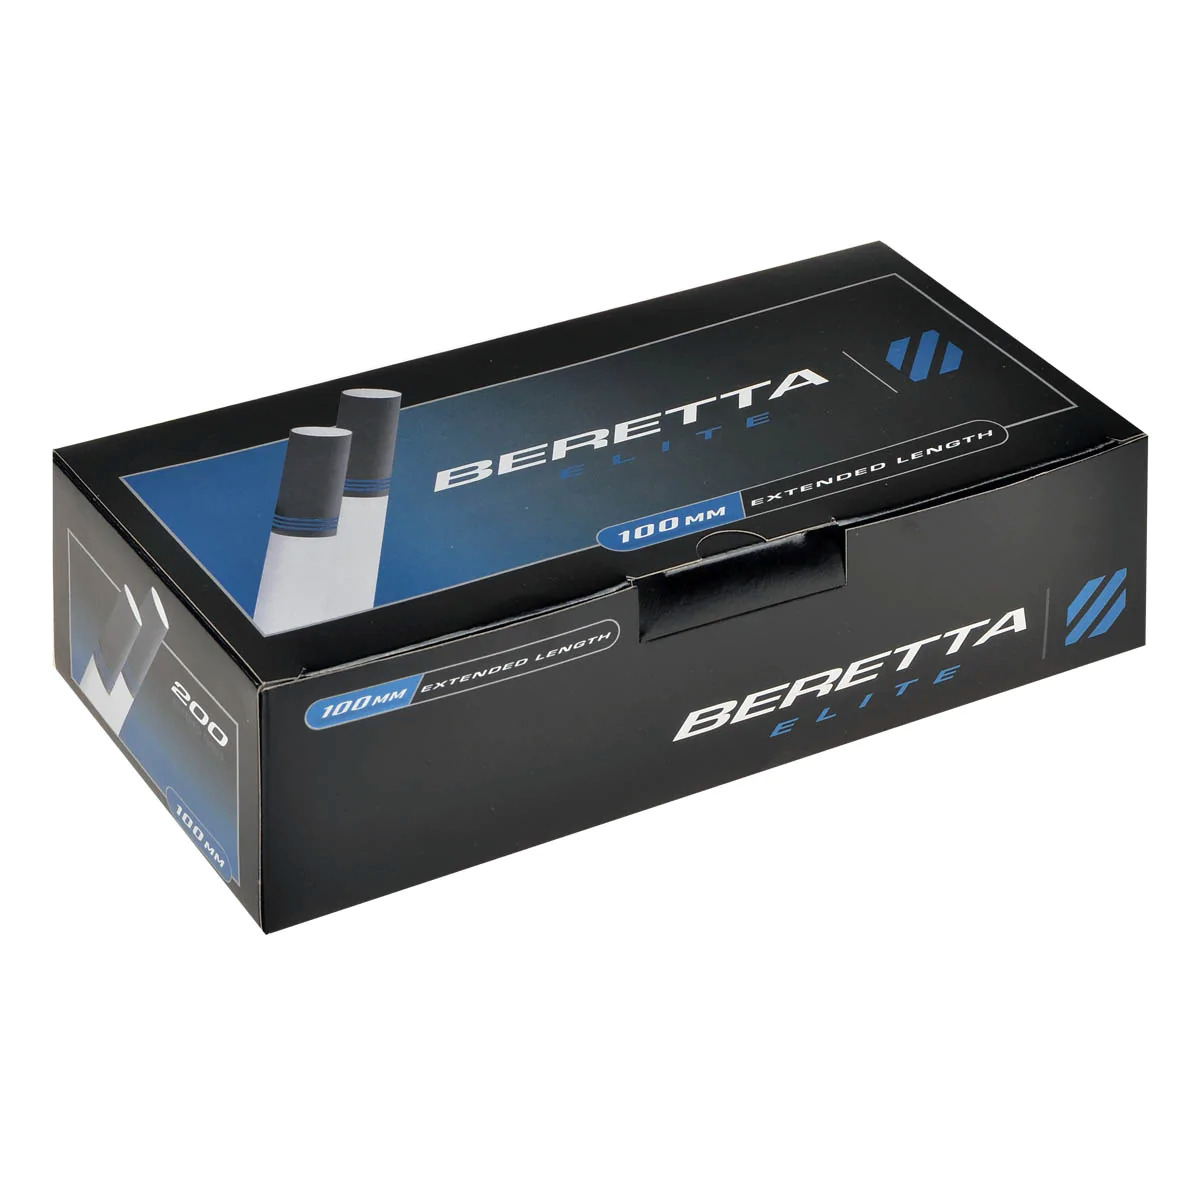 Beretta Elite 100mm Cigarette Tubes 200 Count Per Box (1-Box)